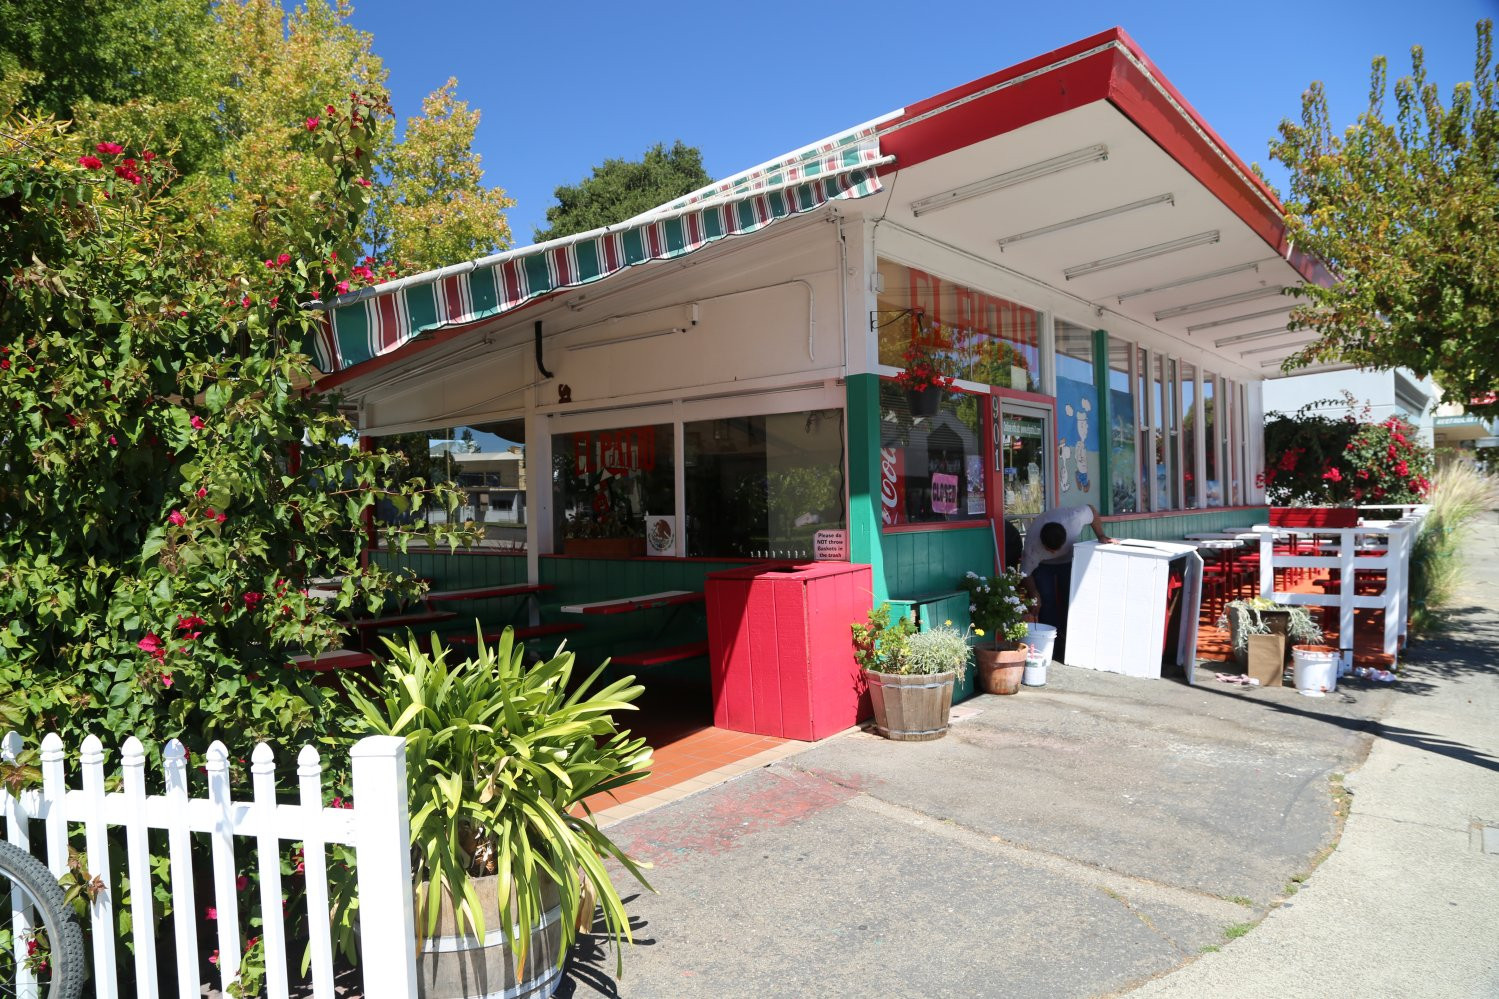 Best ideas about El Patio Santa Rosa
. Save or Pin Guides Santa Rosa CA Restaurants Dave s Travel Corner Now.